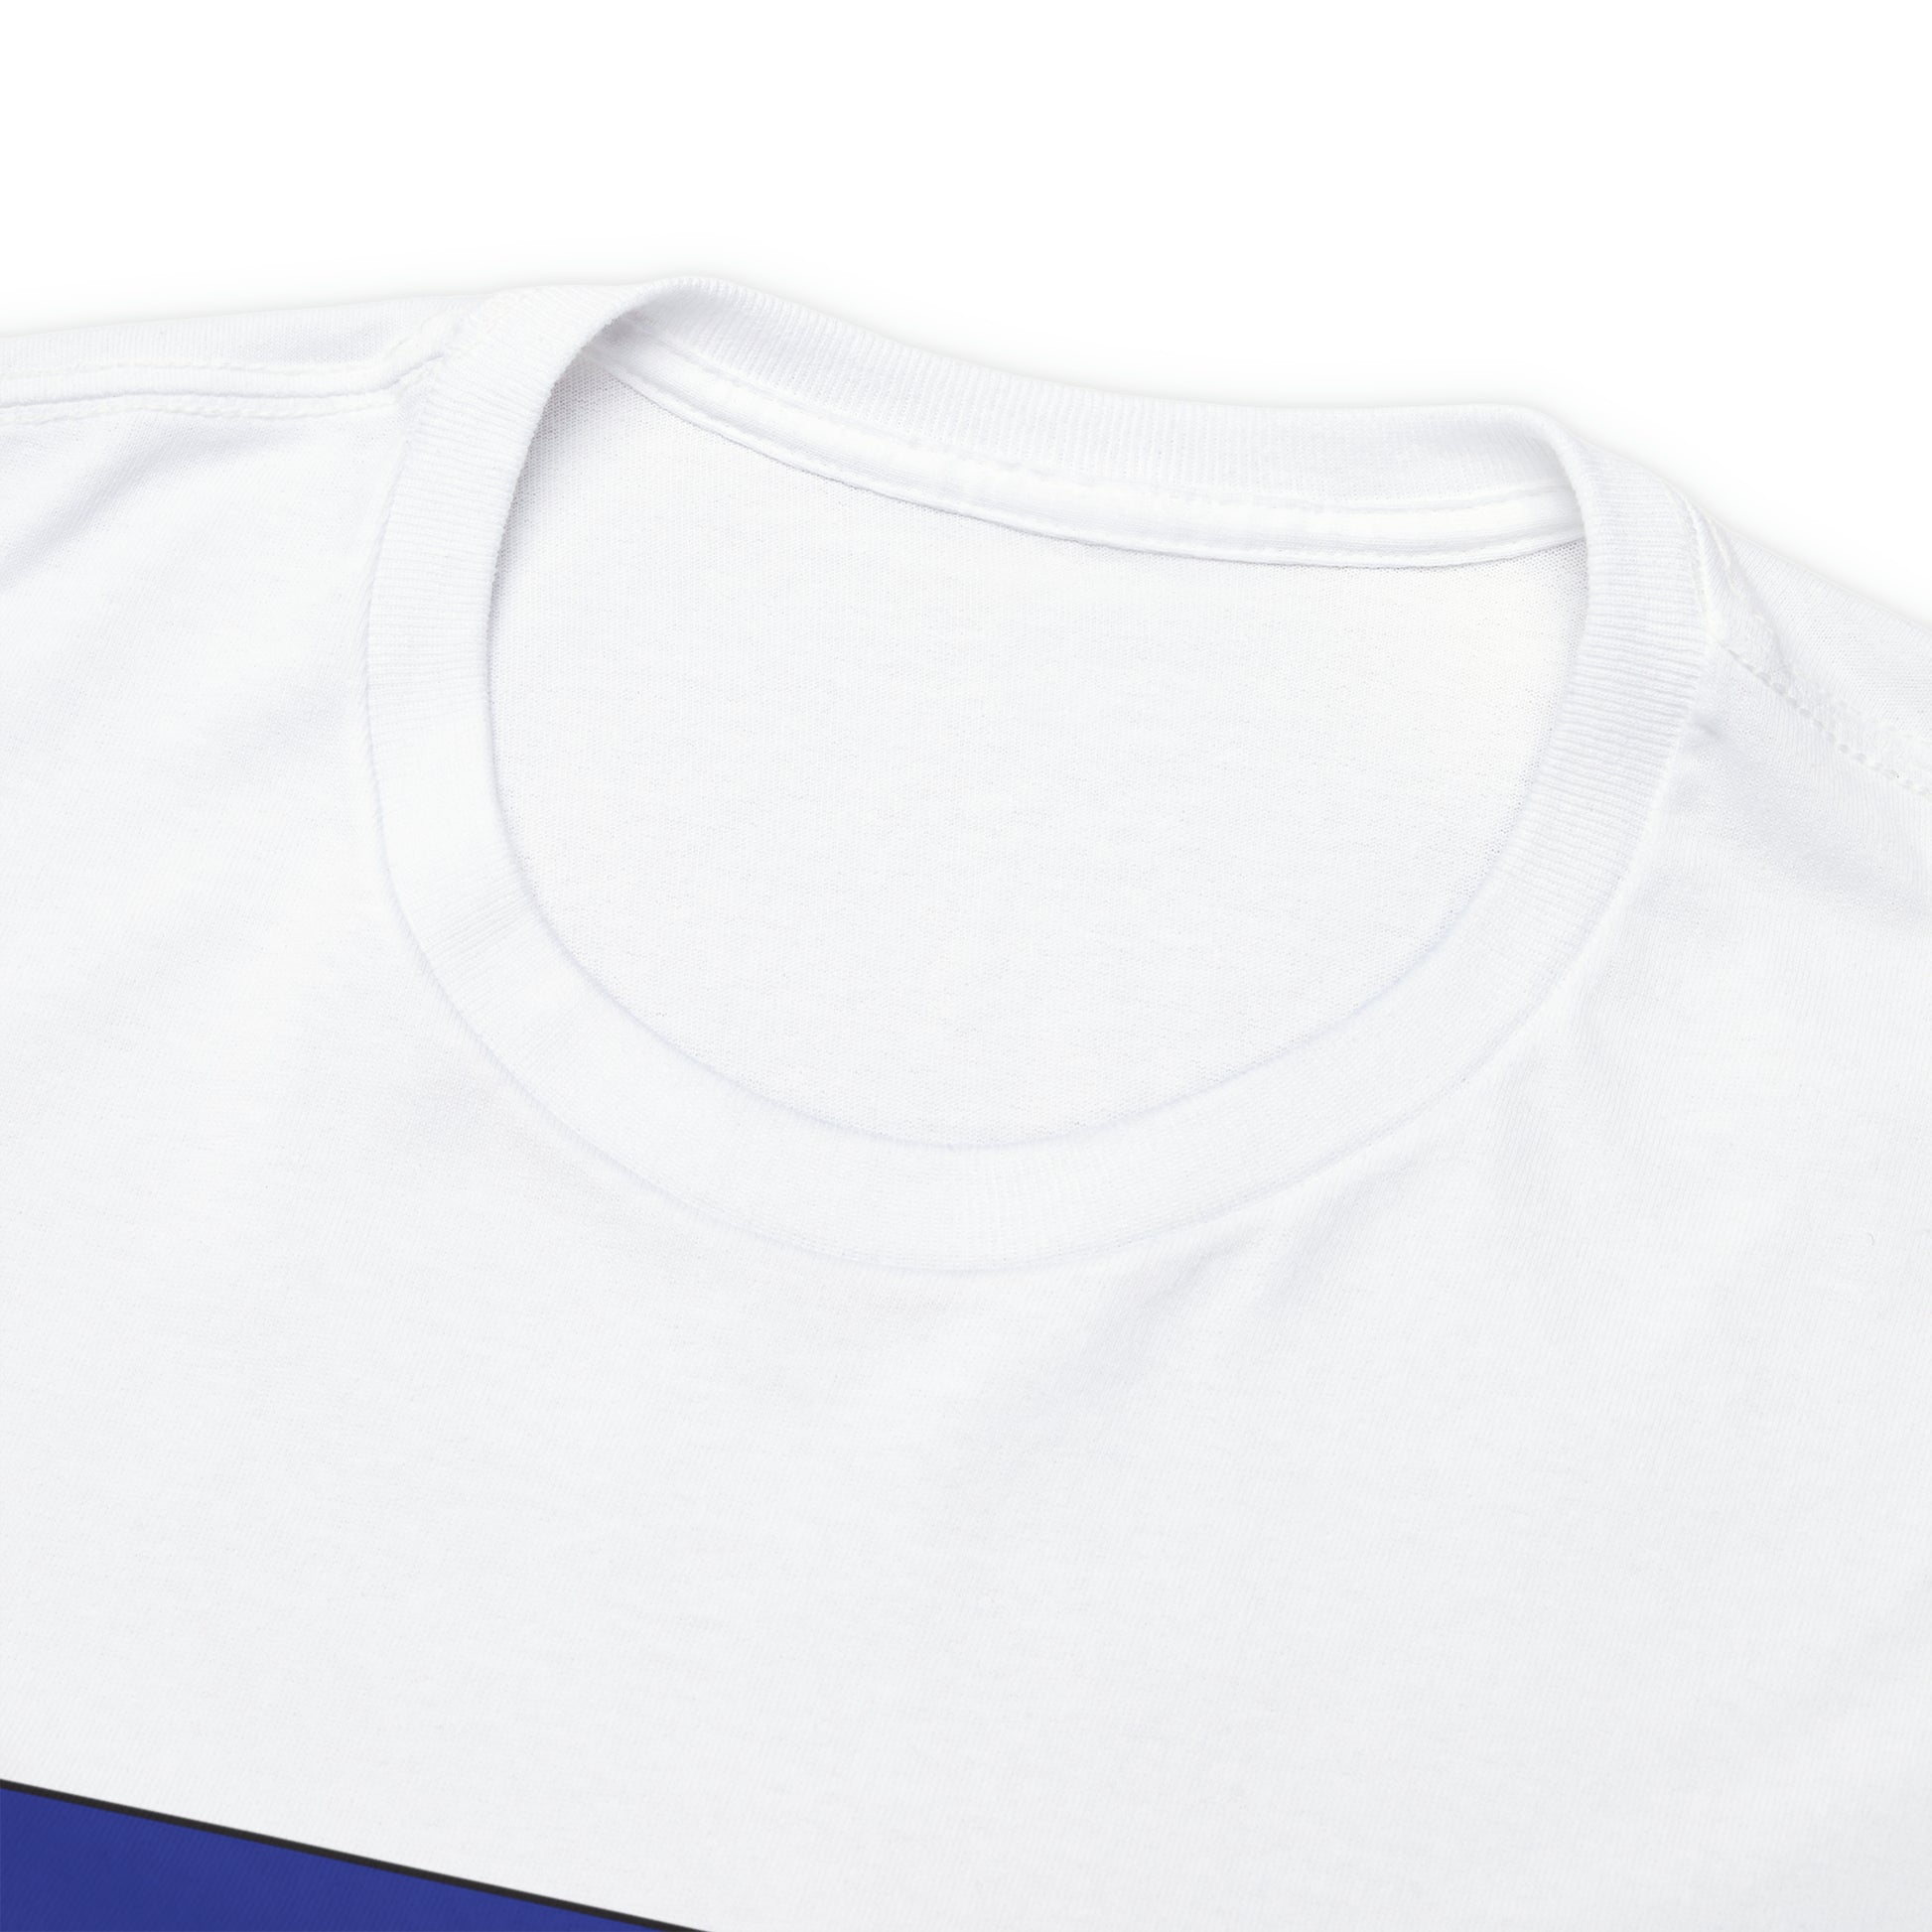 1 FC Magdeburg (1980's logo) Unisex Heavy Cotton T-shirt